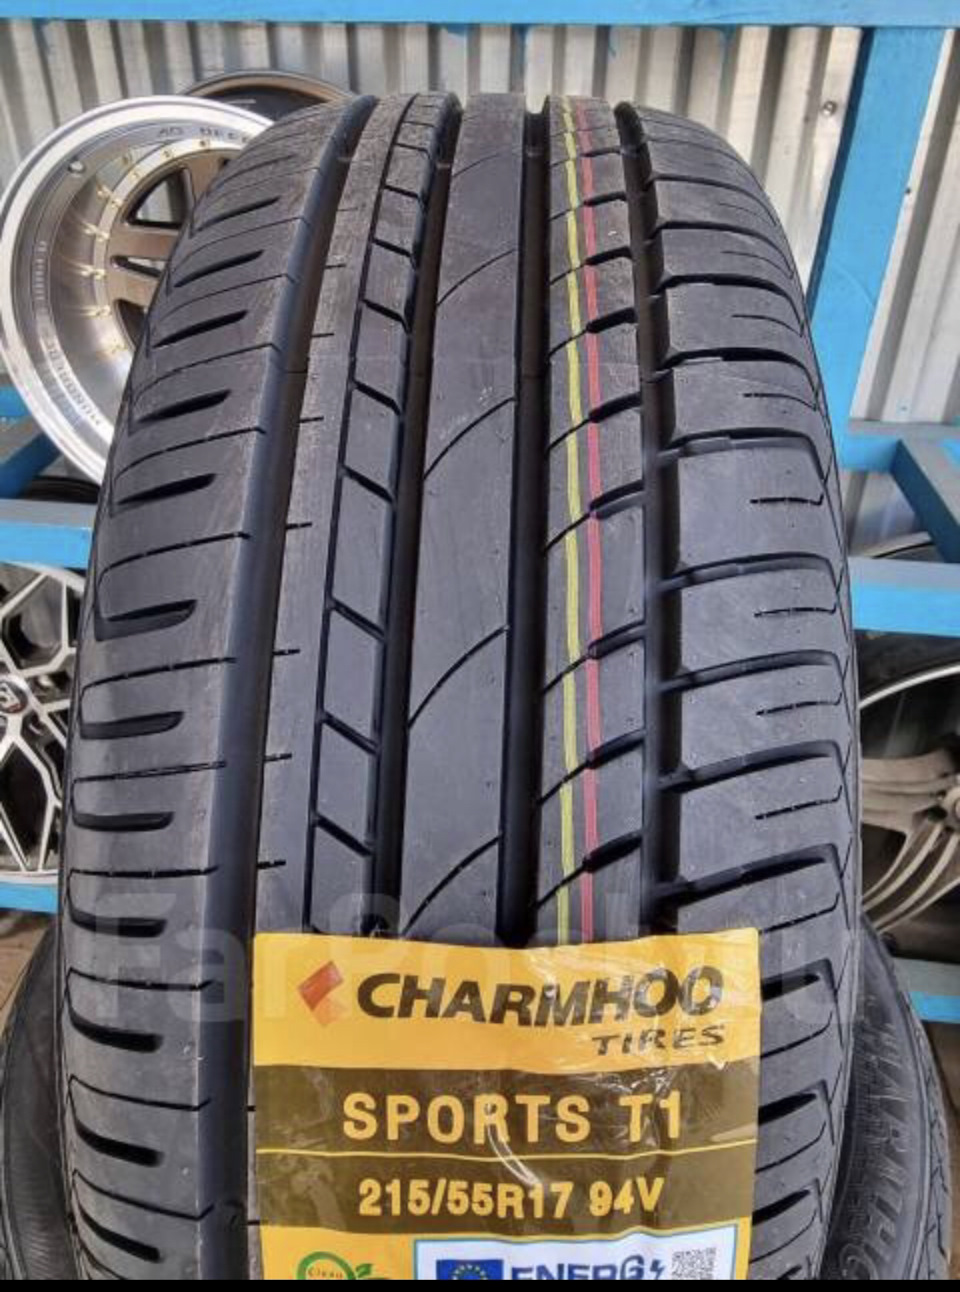 Charmhoo sports отзывы. Charmhoo Sports t1 шины. 245/45zr17 Charmhoo XL Sports t1. Charmhoo 94w Sports t1 245/40/19. Charmhoo Touring ch01 215 60 16.